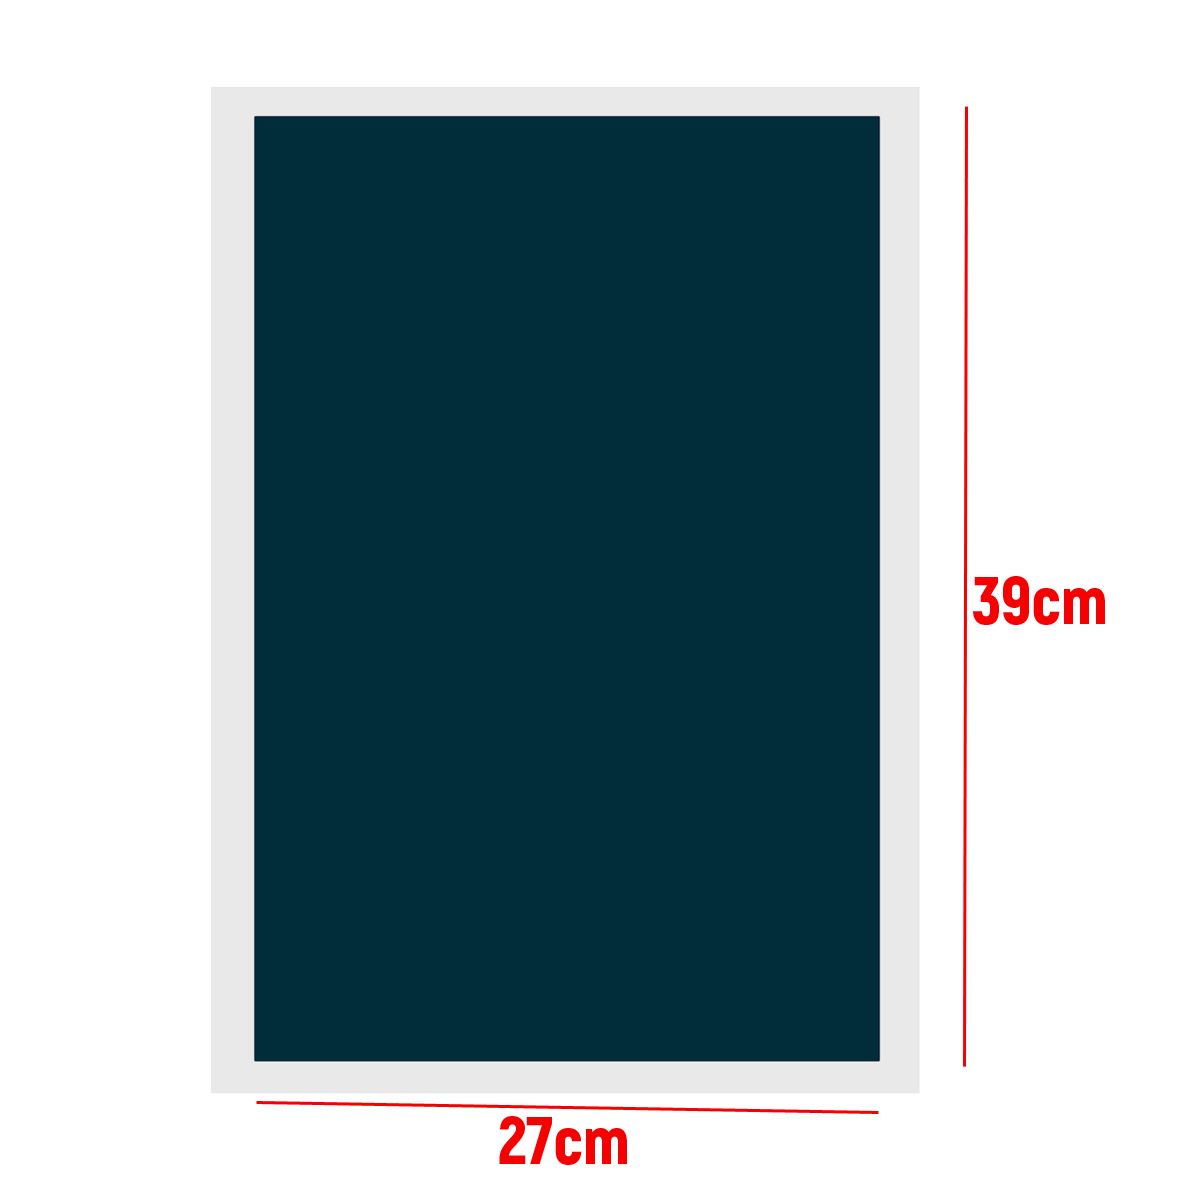 39cm27cm-Ceramic-Laser-Paper-For-CNC-Laser-Engraving-Machine-Logo-Mark-Printer-Cutter-Accessories-Ca-1418283